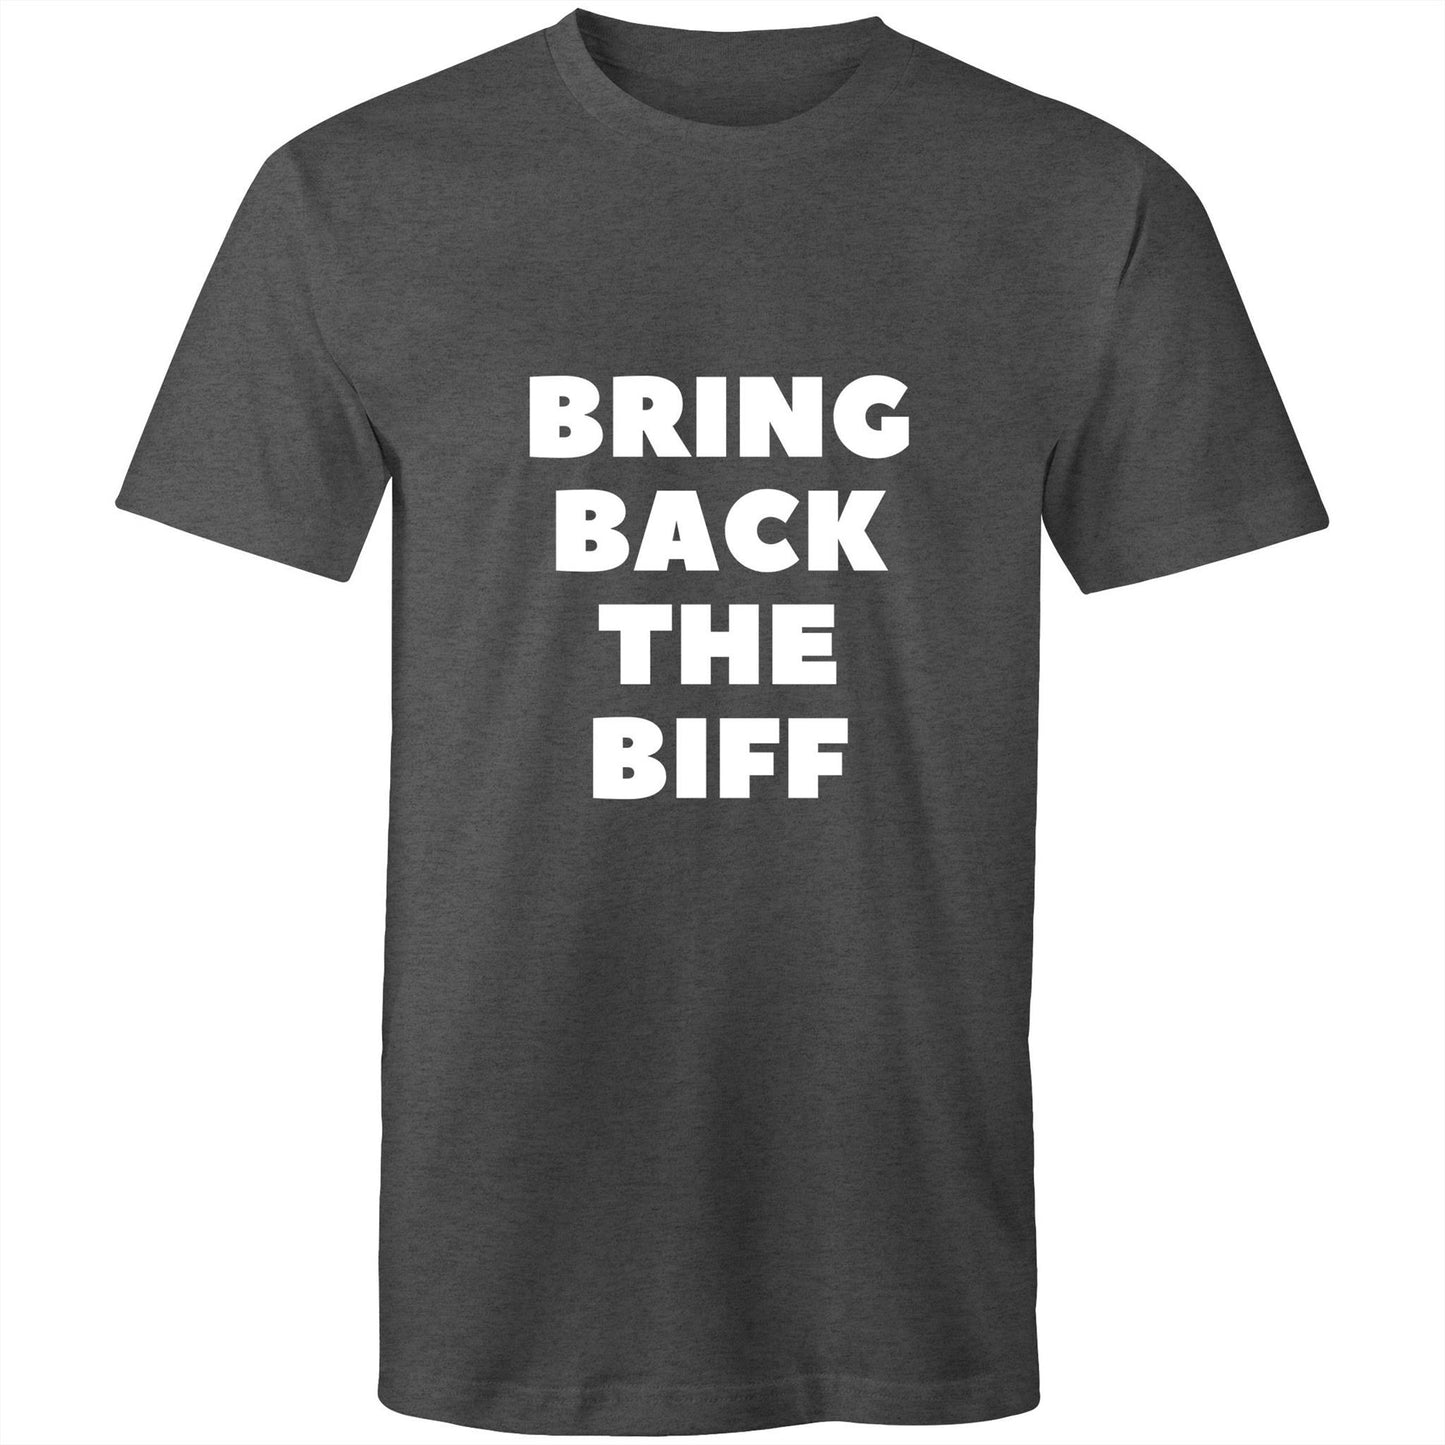 BRING BACK THE BIFF - Mens T-Shirt